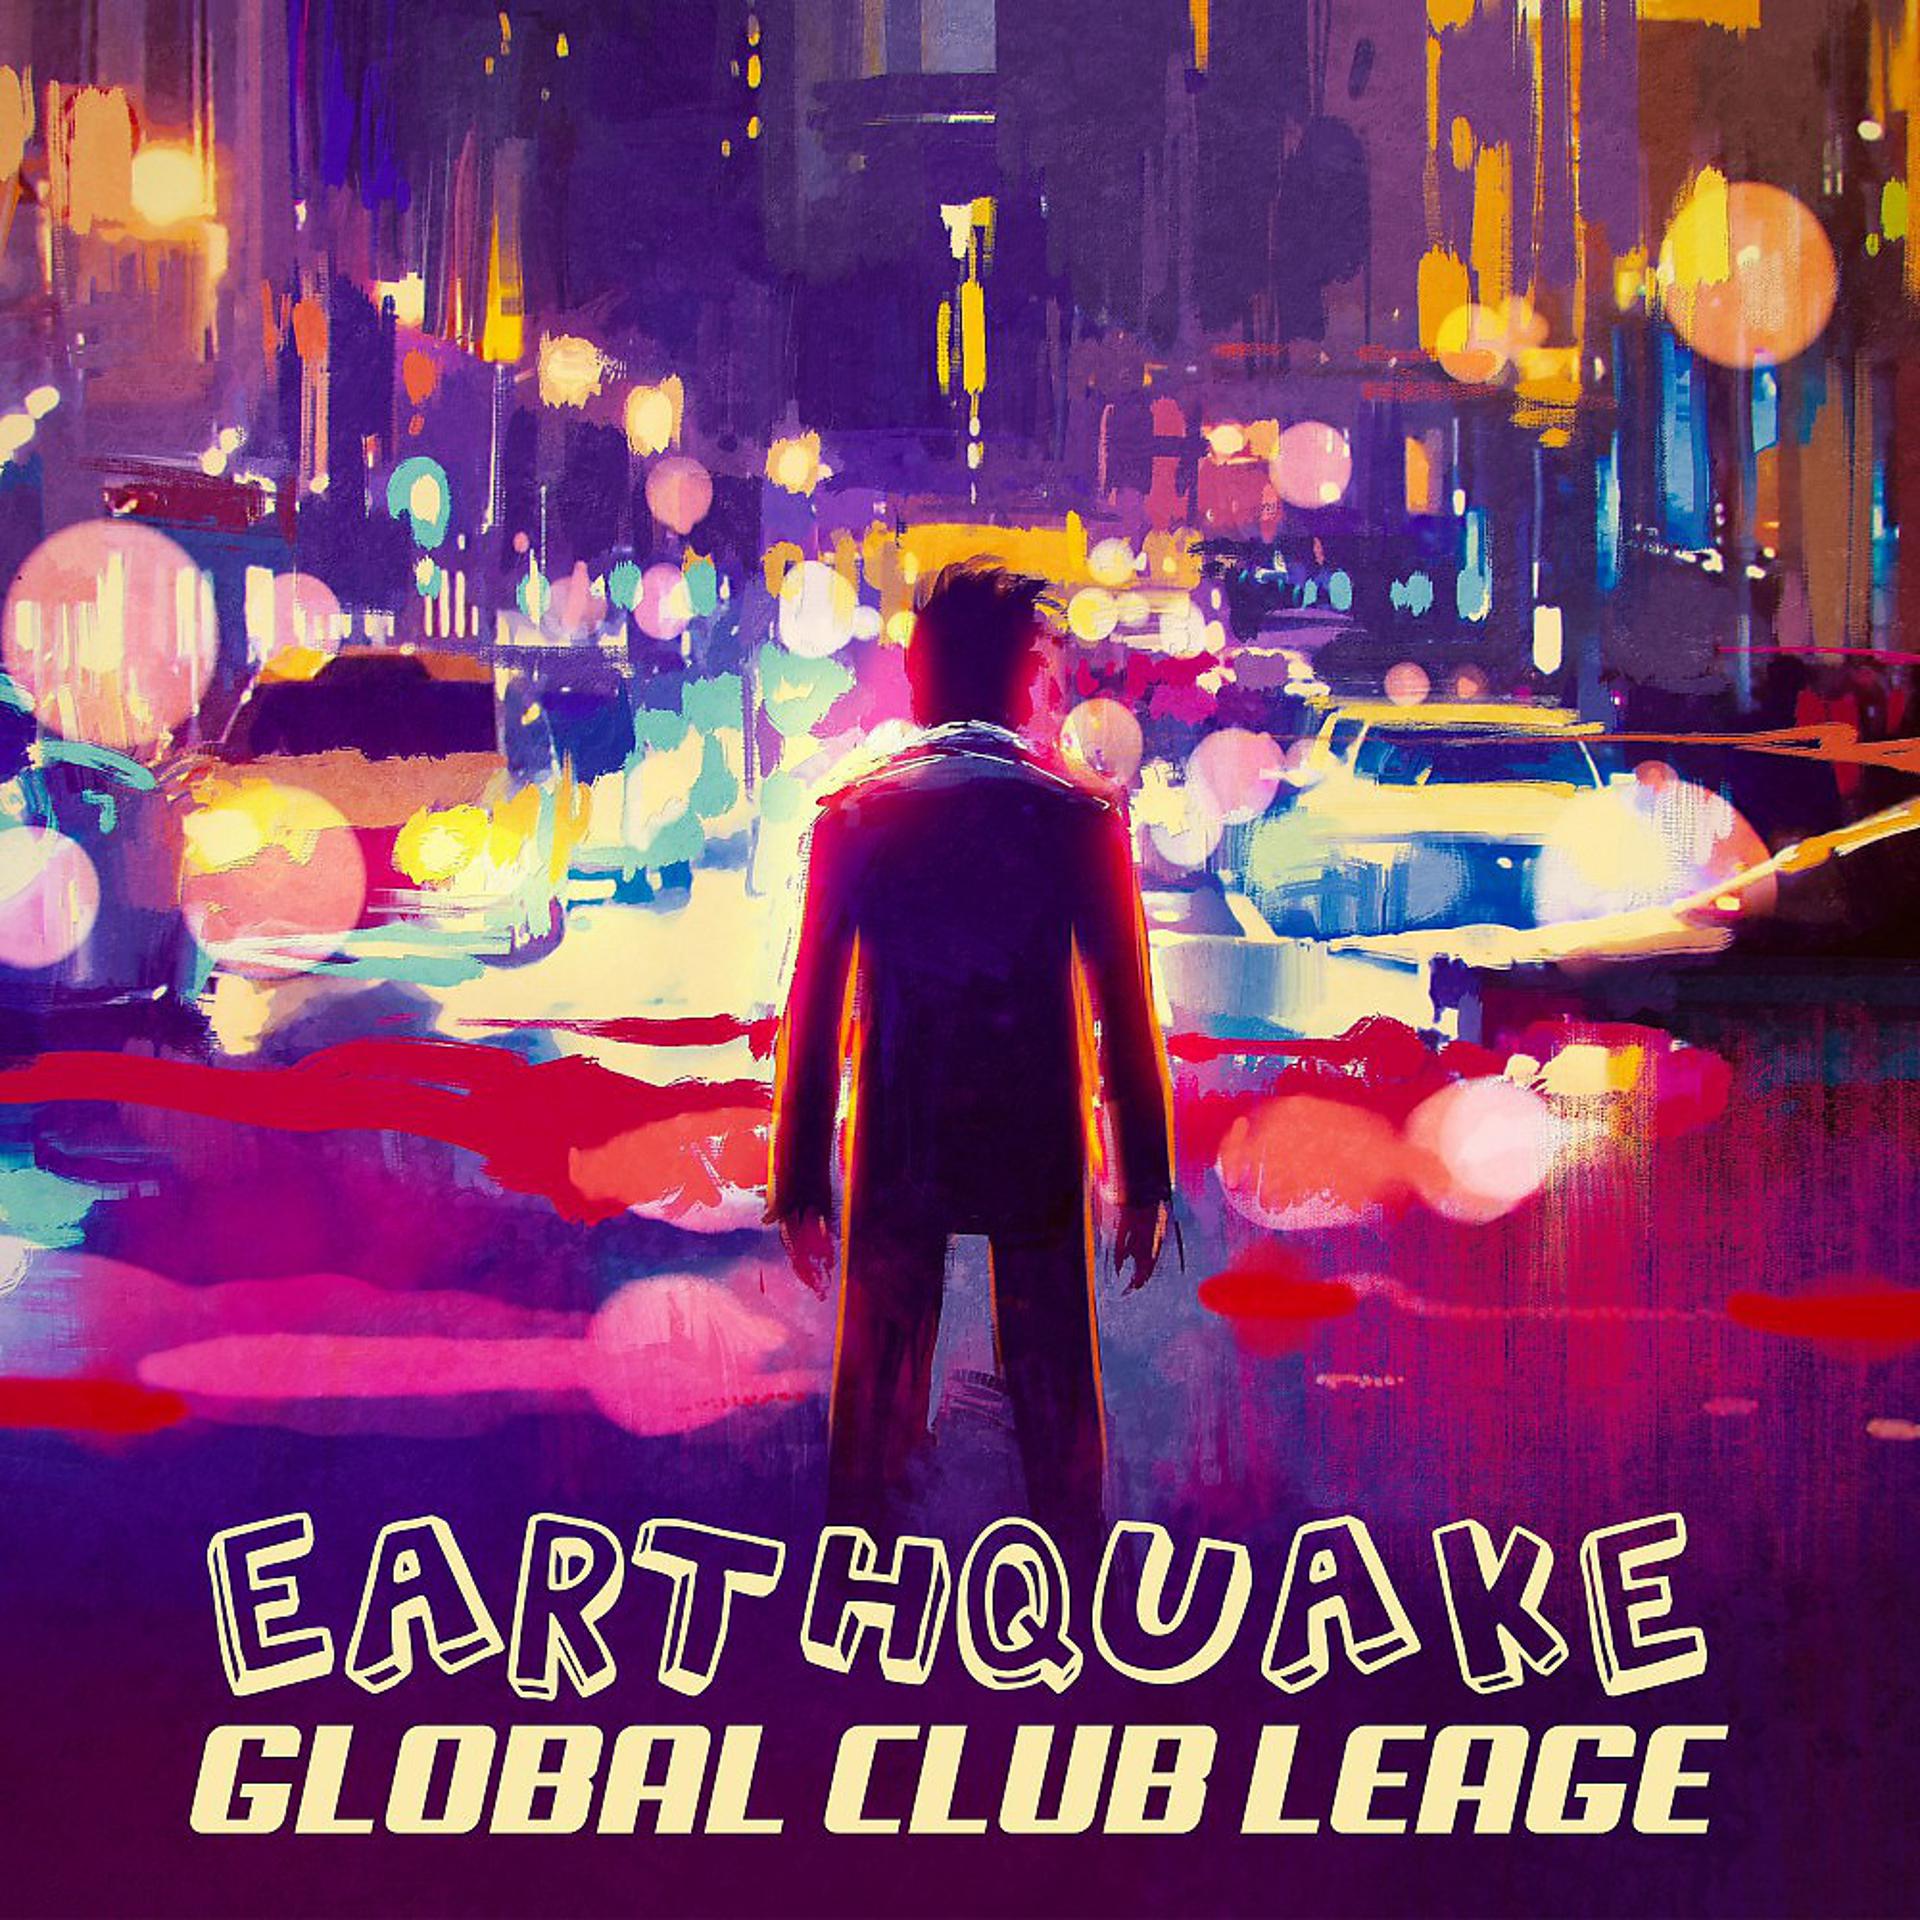 Постер альбома Earthquake